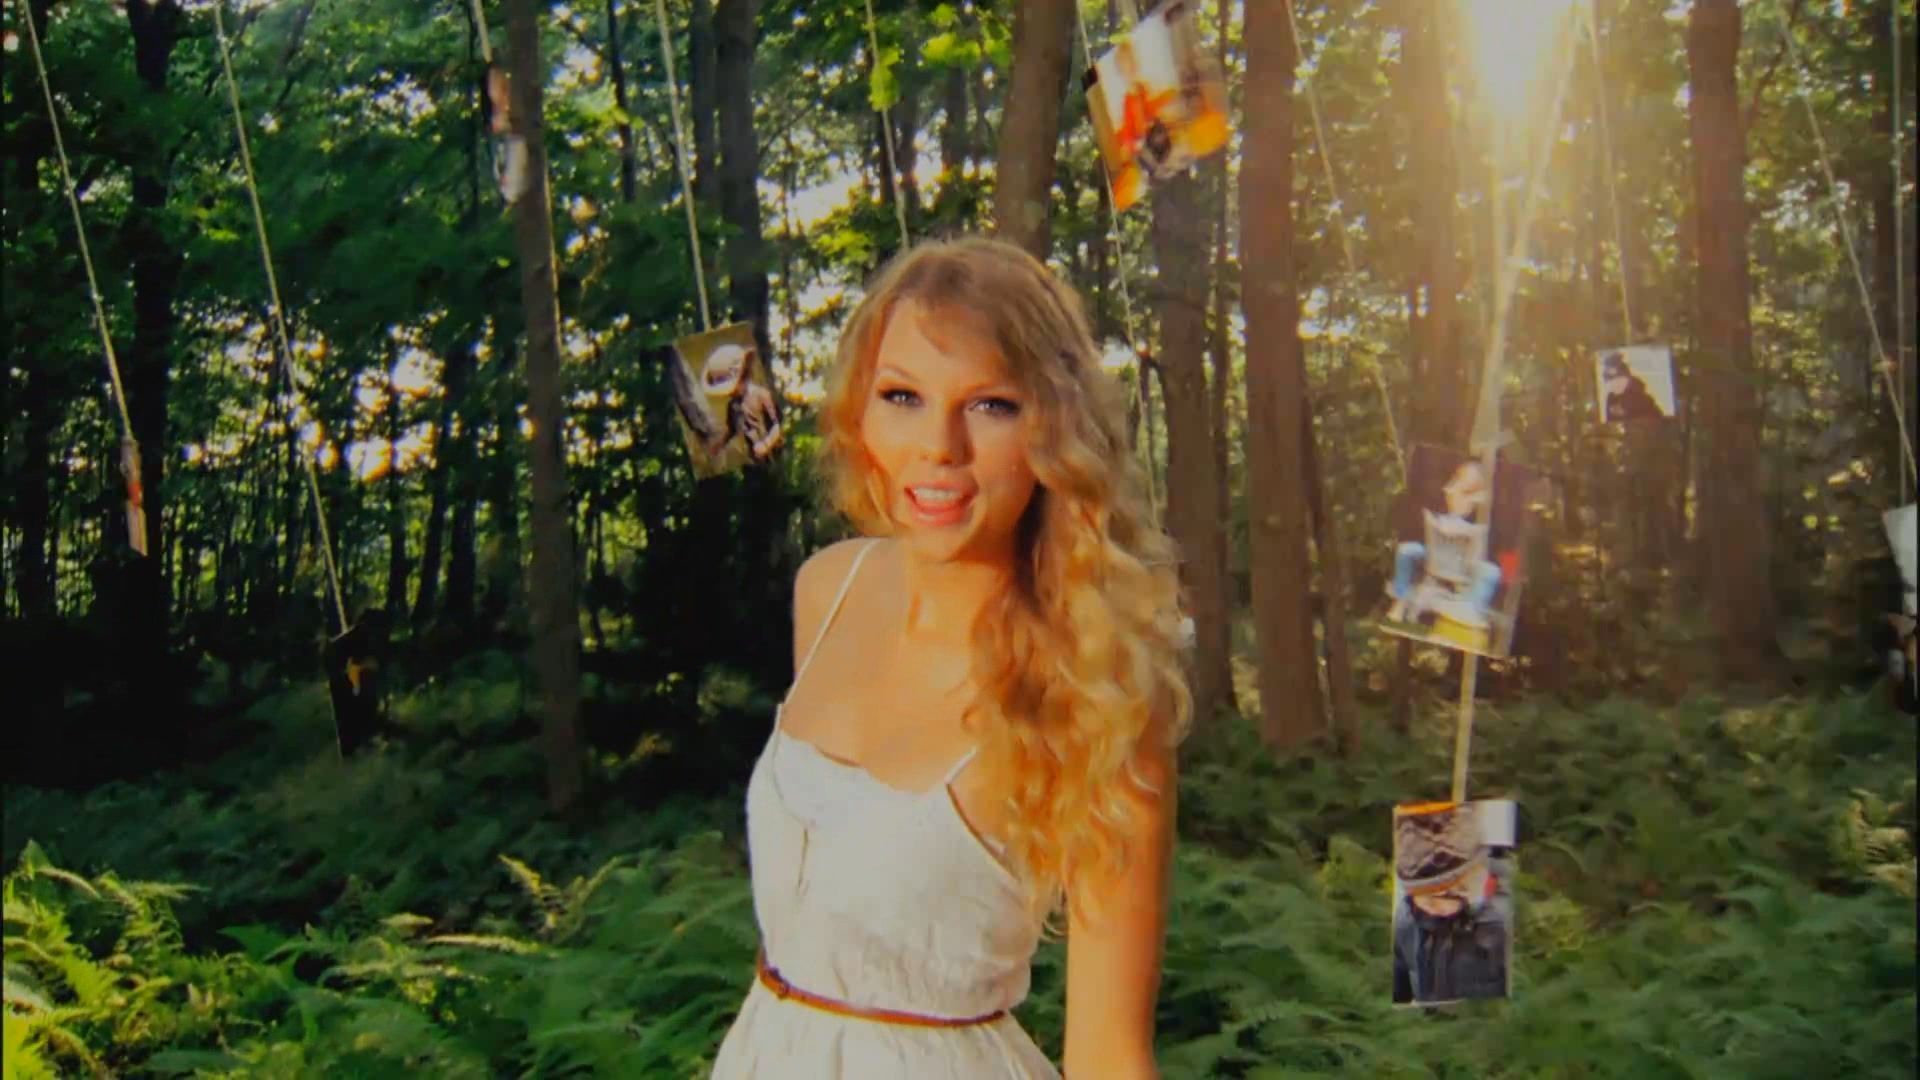 Taylor Swift Image: Taylor Swift [Music Video]. Taylor swift mine, Taylor swift photohoot, Taylor swift image